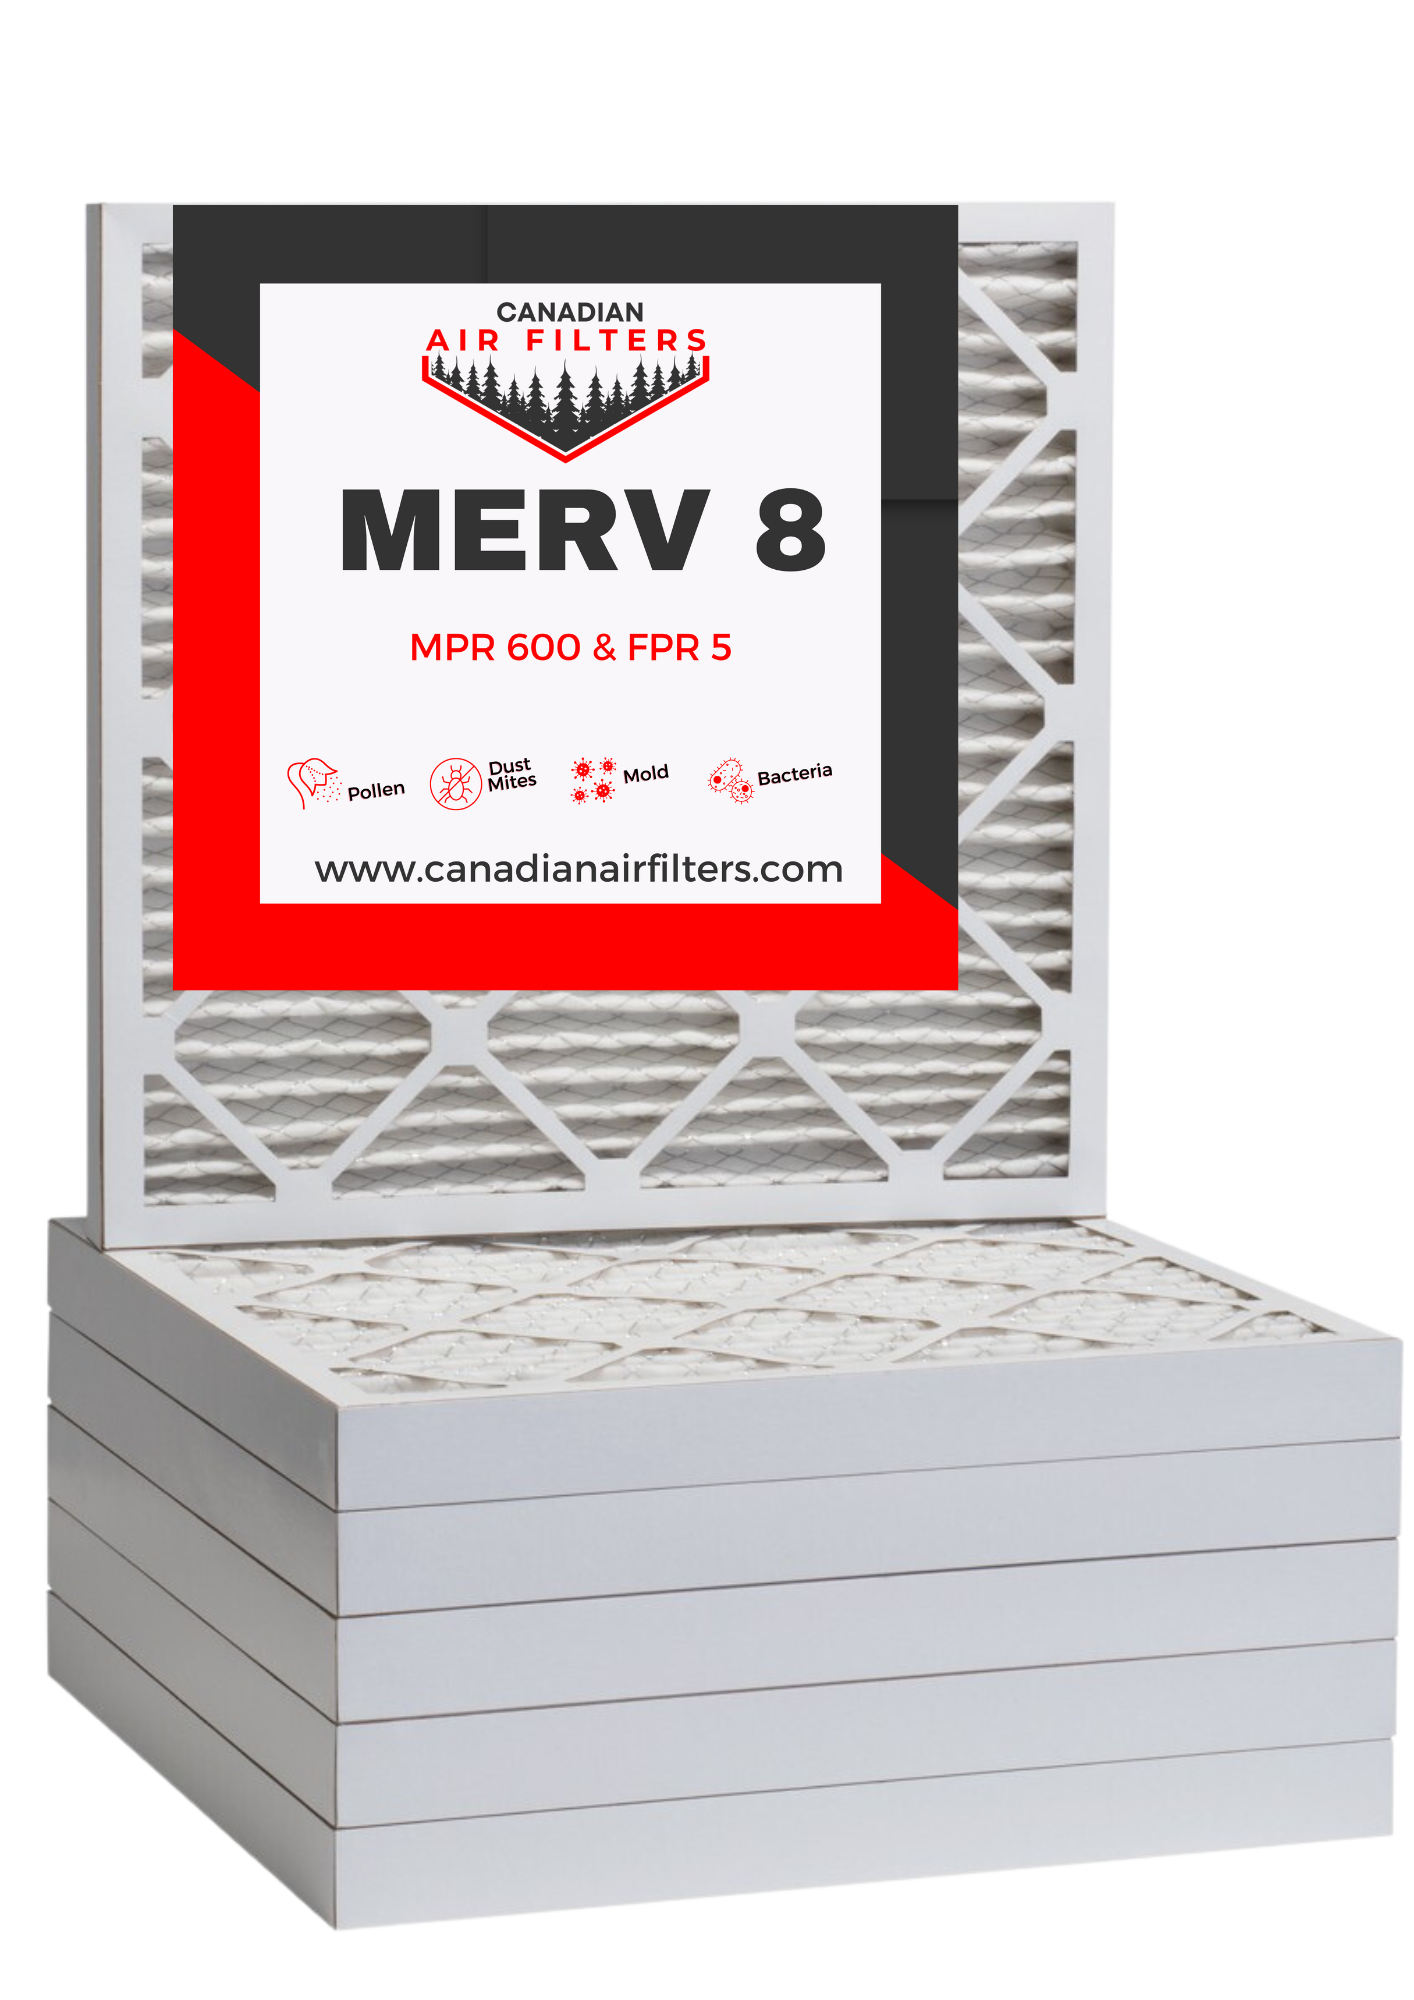 13.18 x 15.3 x 2 MERV 8 Pleated Air Filter (06 pack)